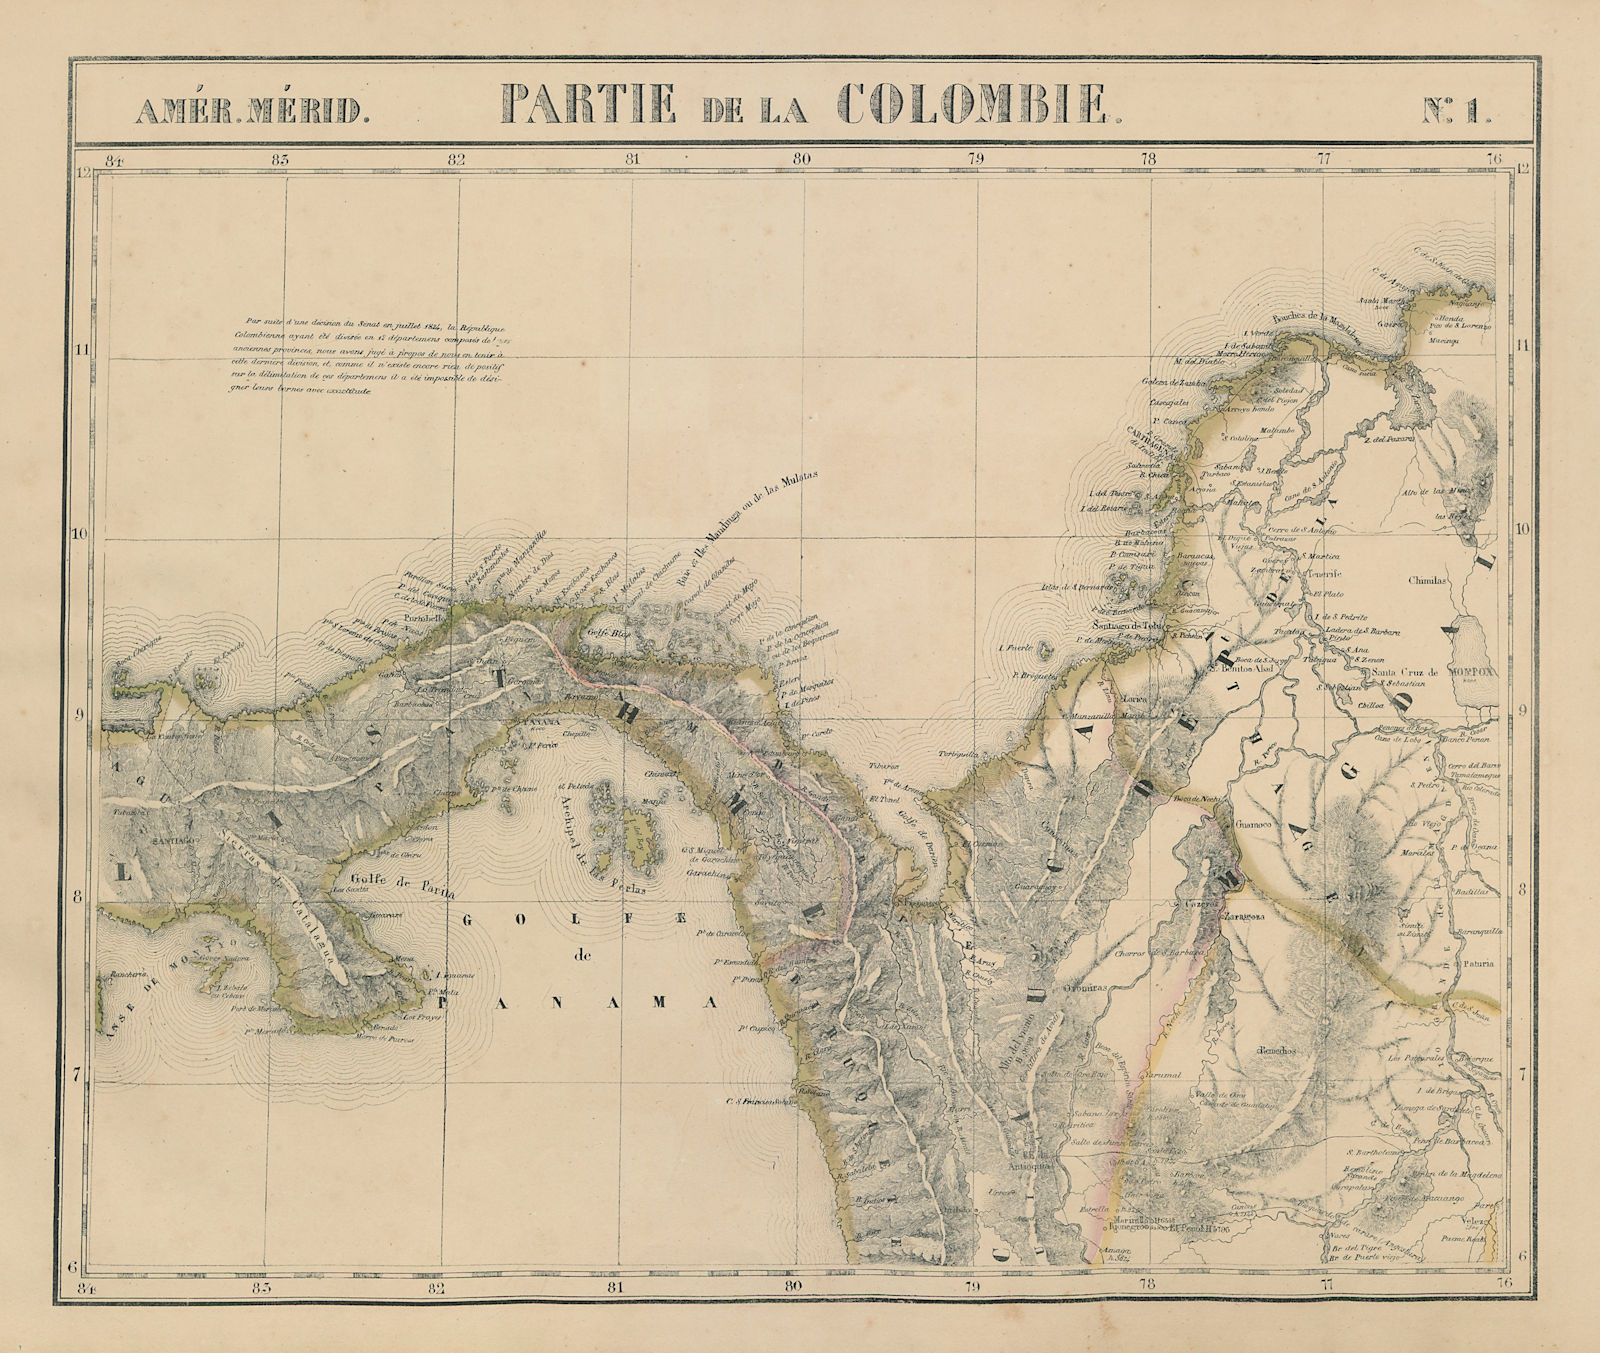 Amér. Mér. Colombie #1. Panama & northwestern Colombia. VANDERMAELEN 1827 map